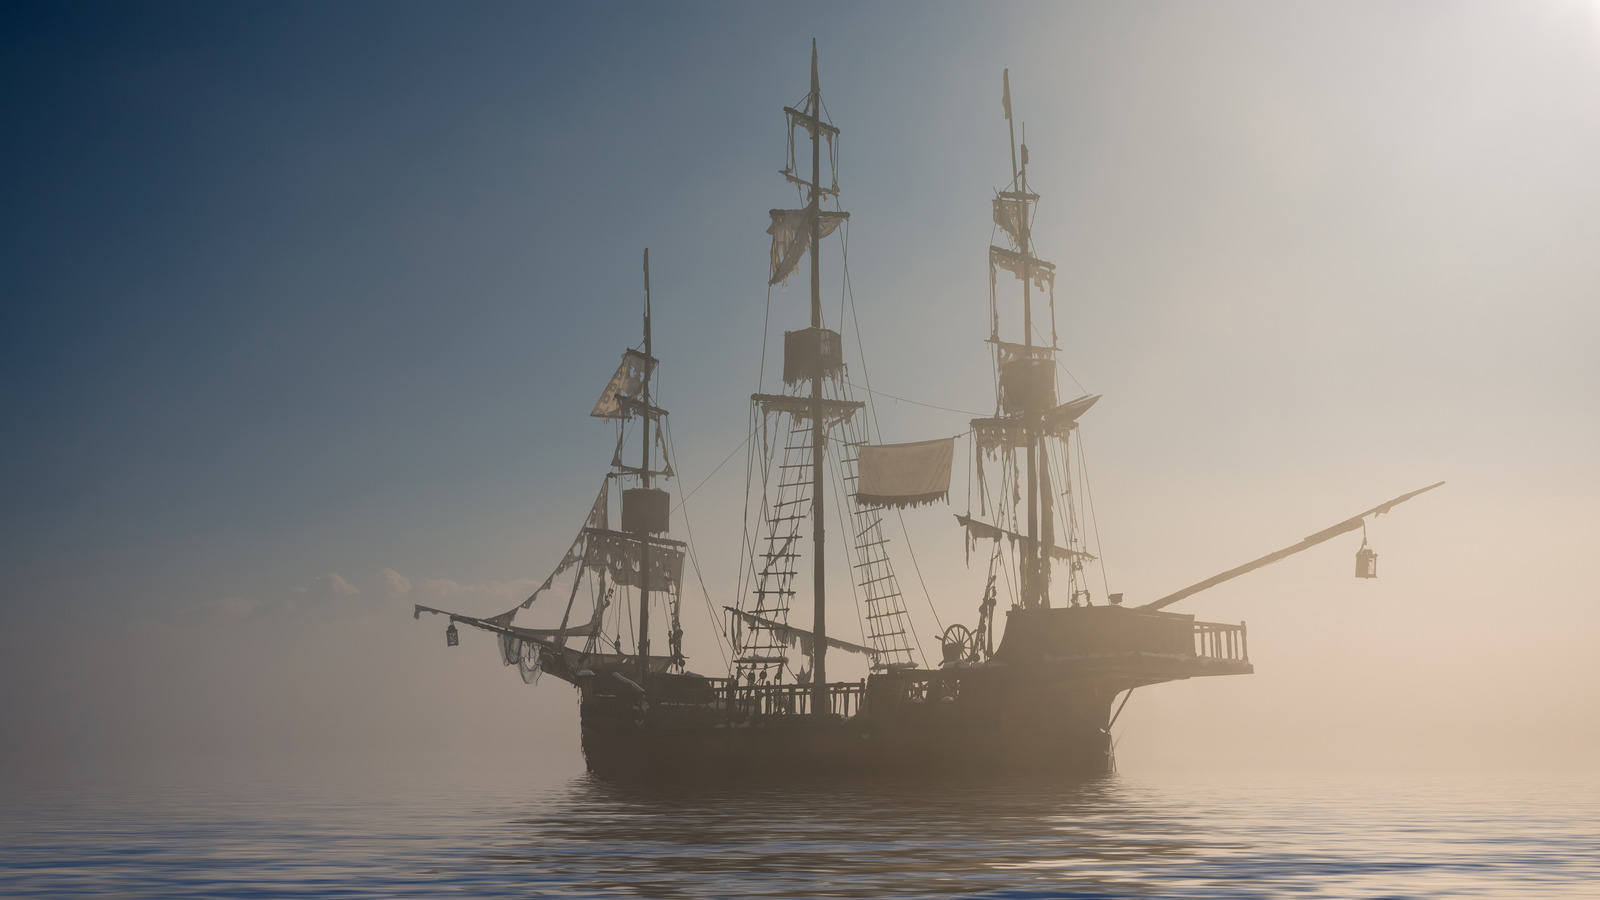 ghost pirate ship silhouette